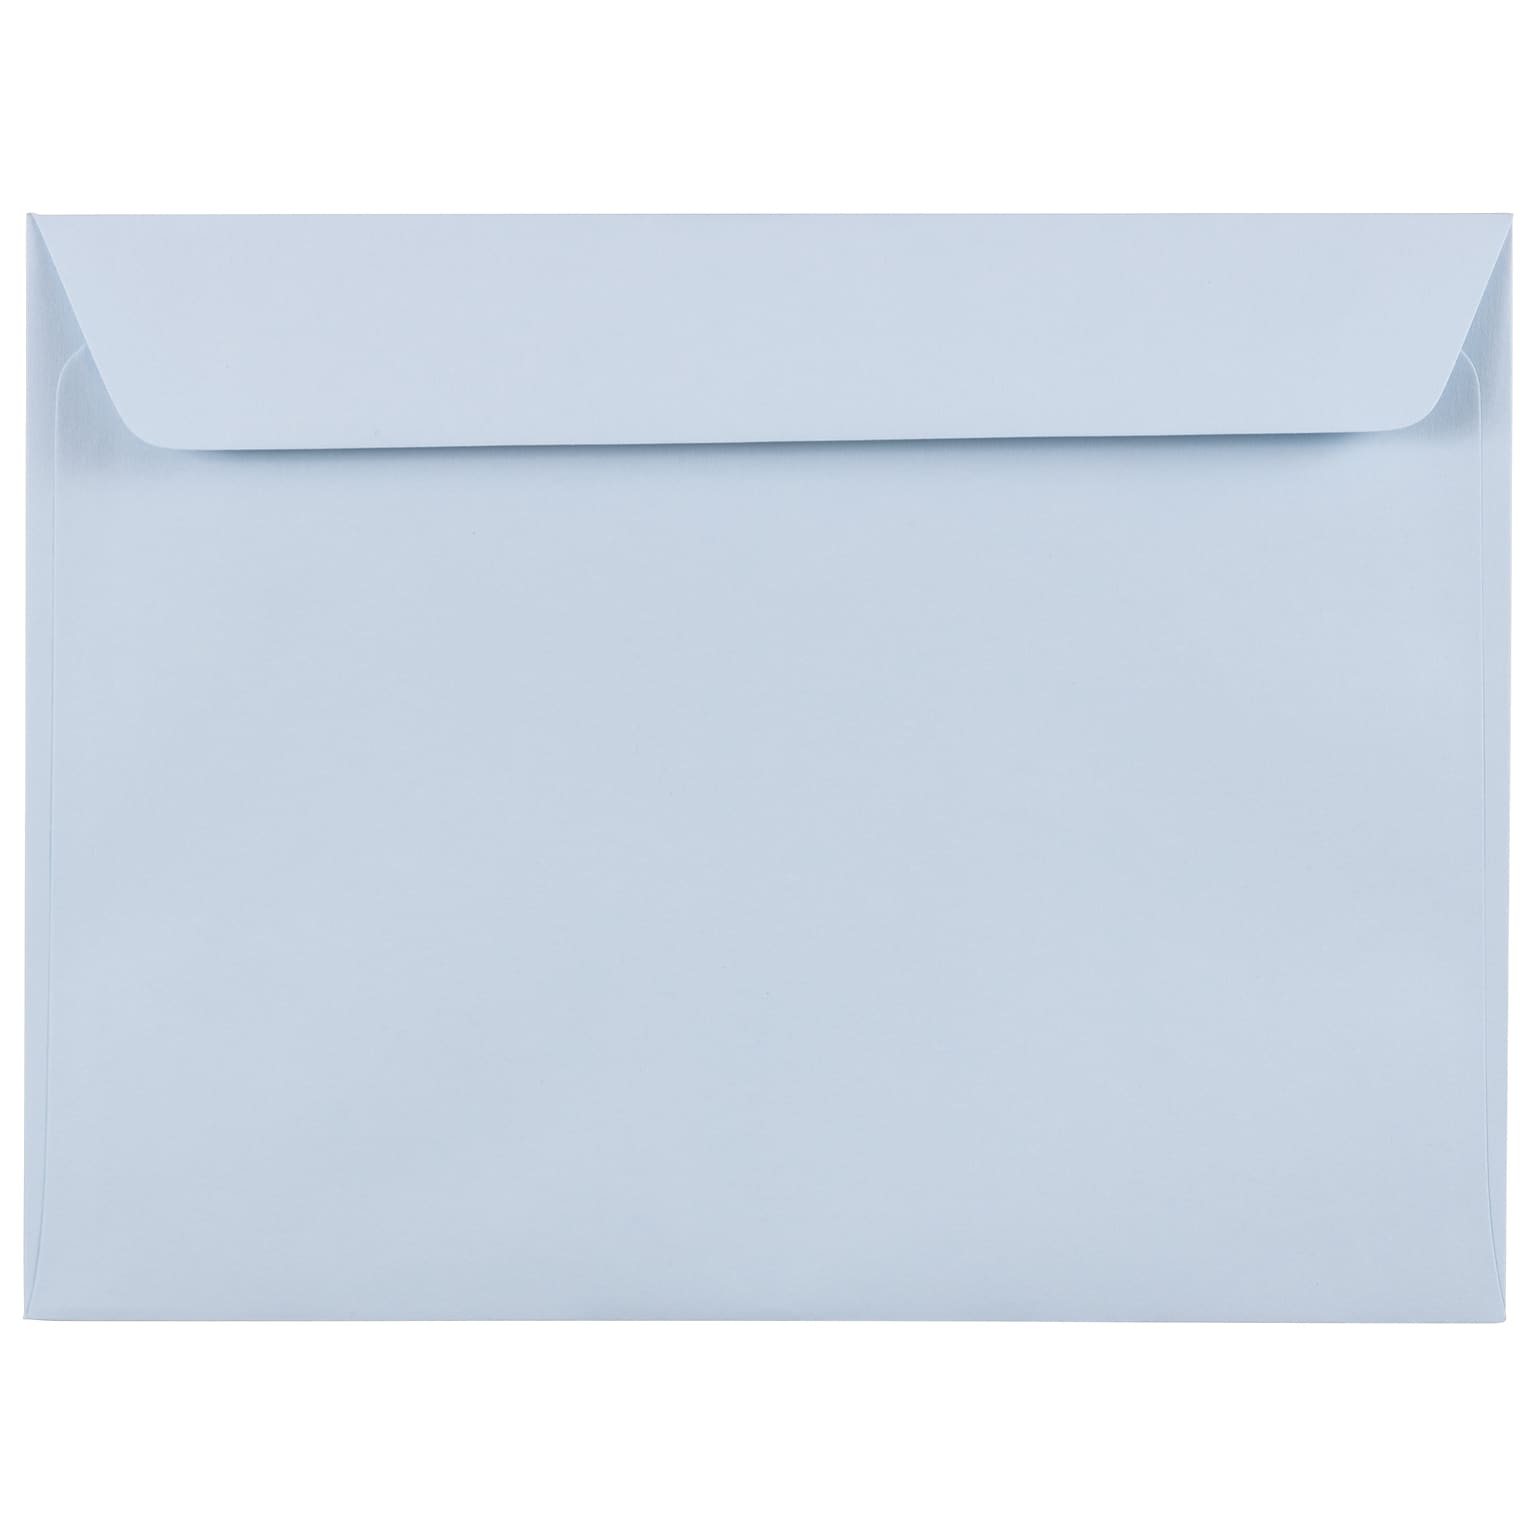 JAM Paper 9 x 12 Booklet Envelopes, Baby Blue, 25/Pack (21515987)